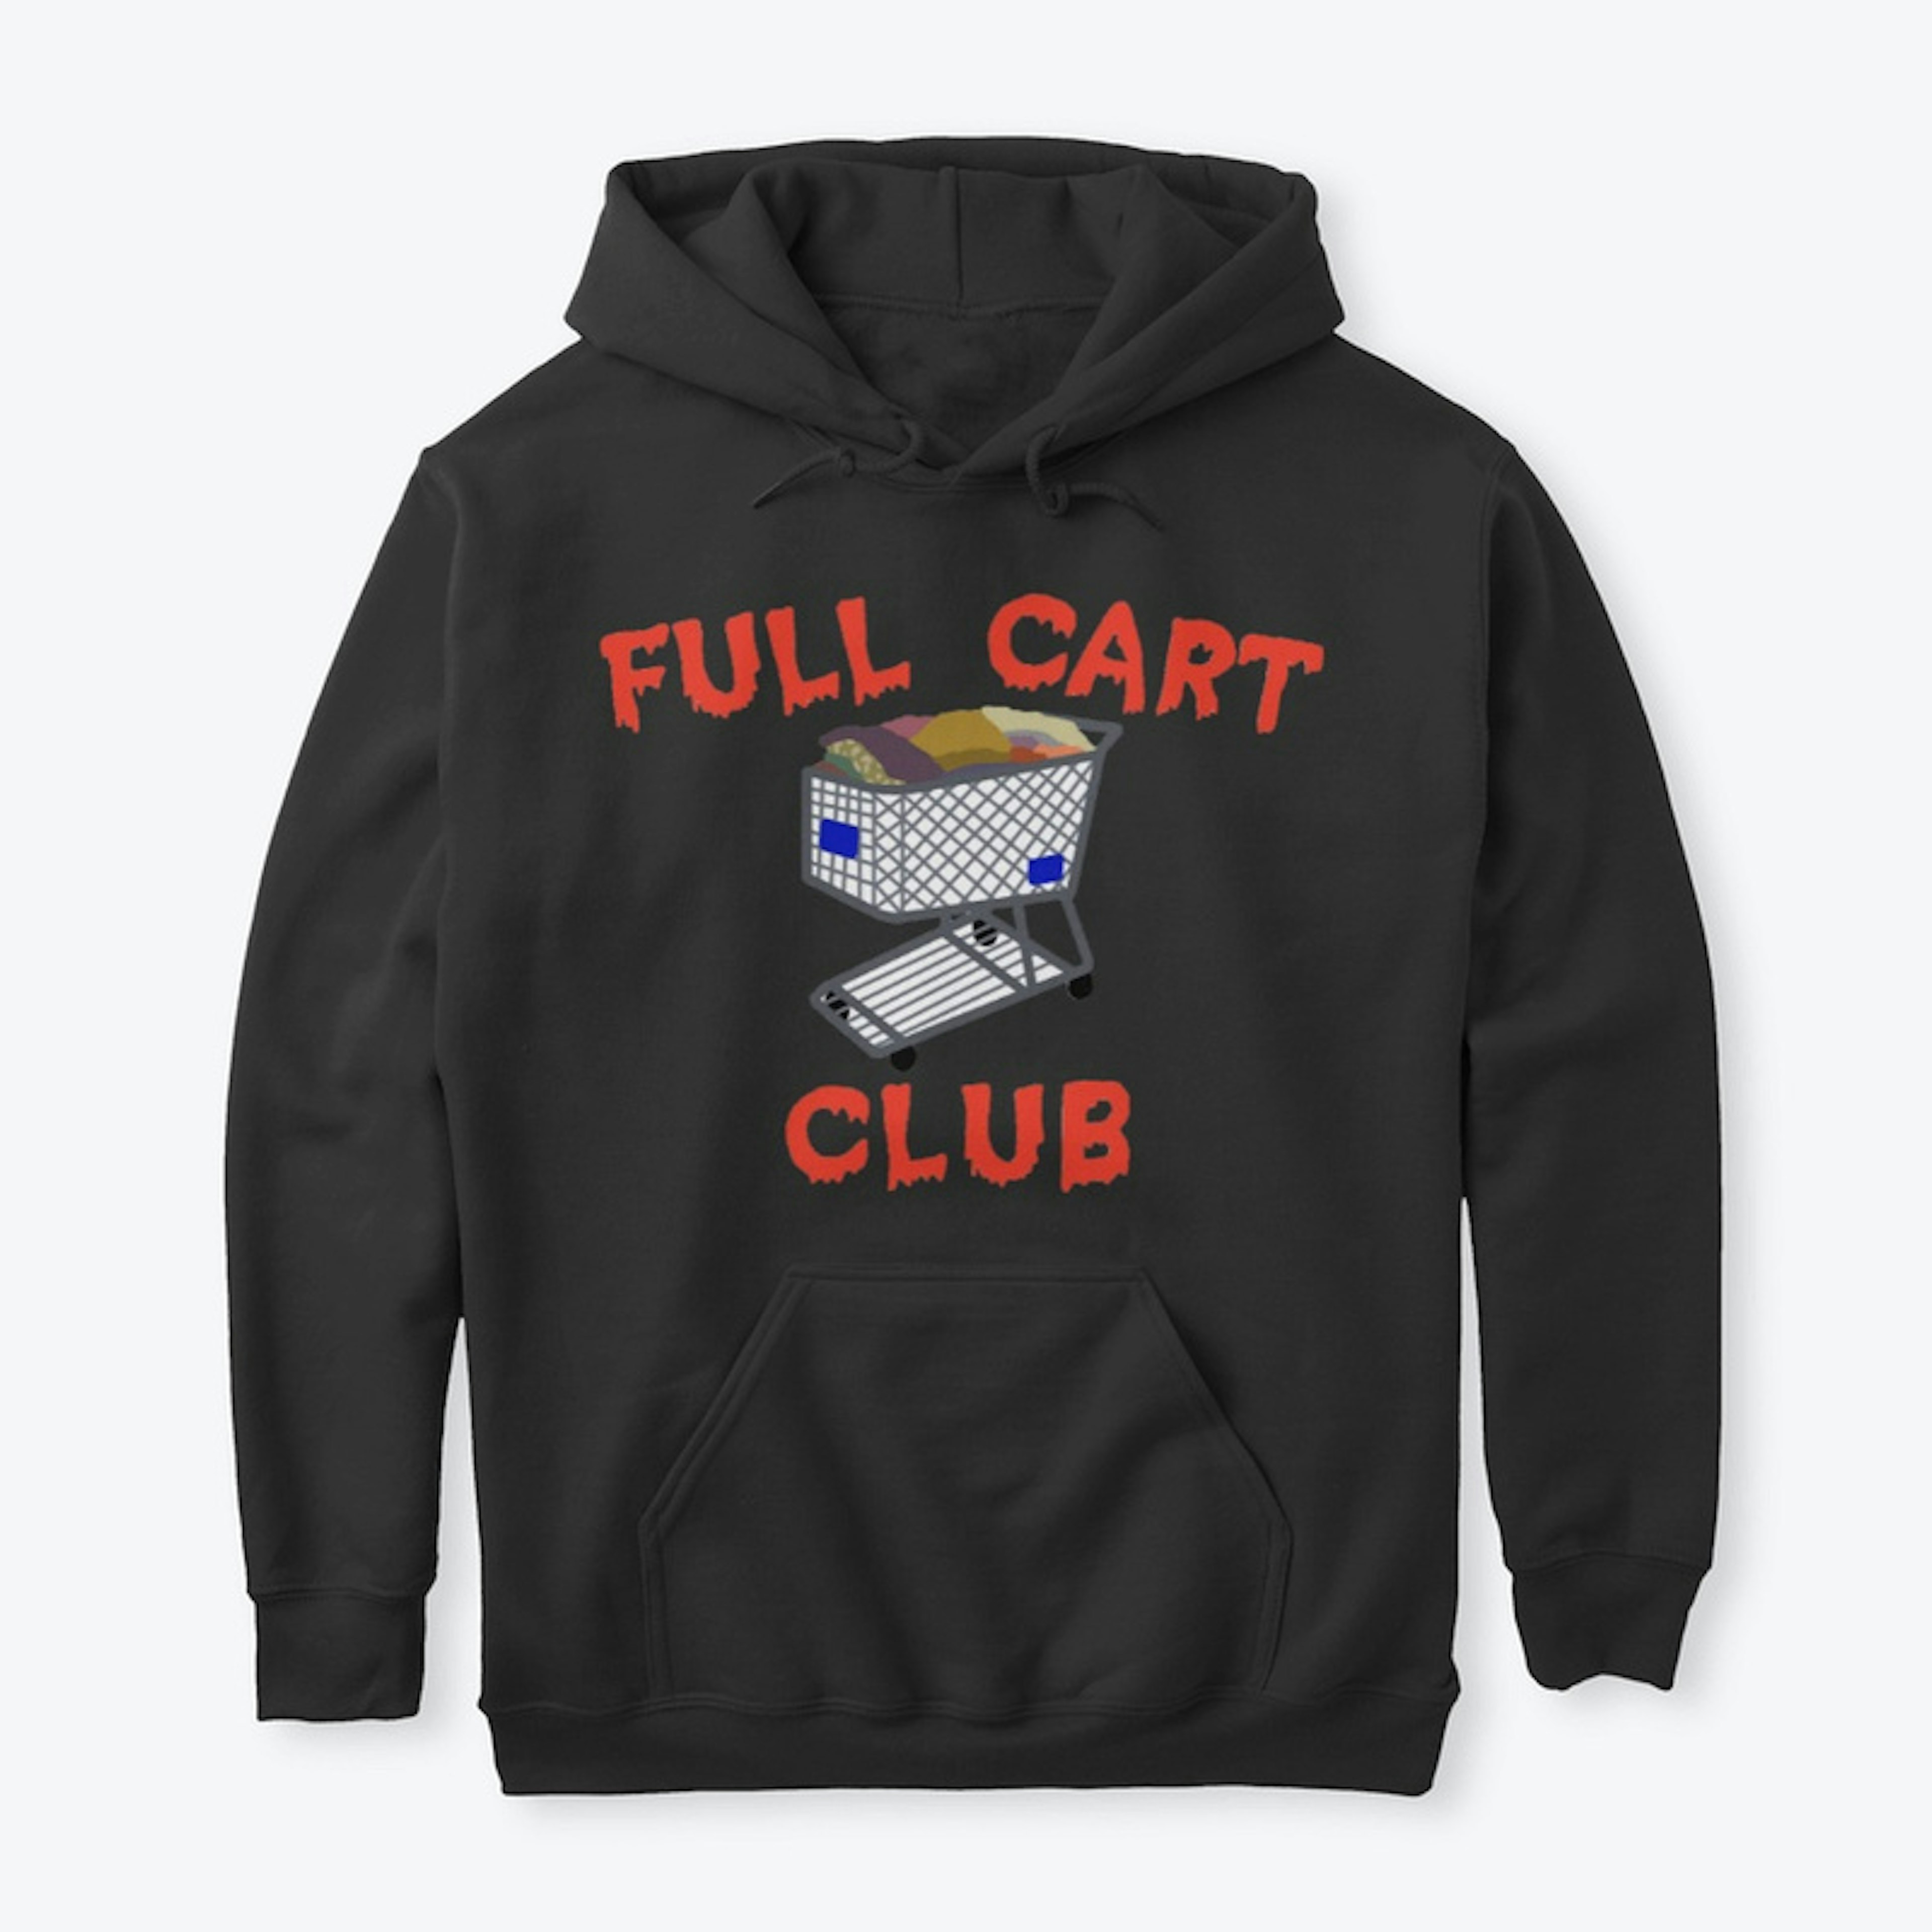 Fall Cart Club Illustration